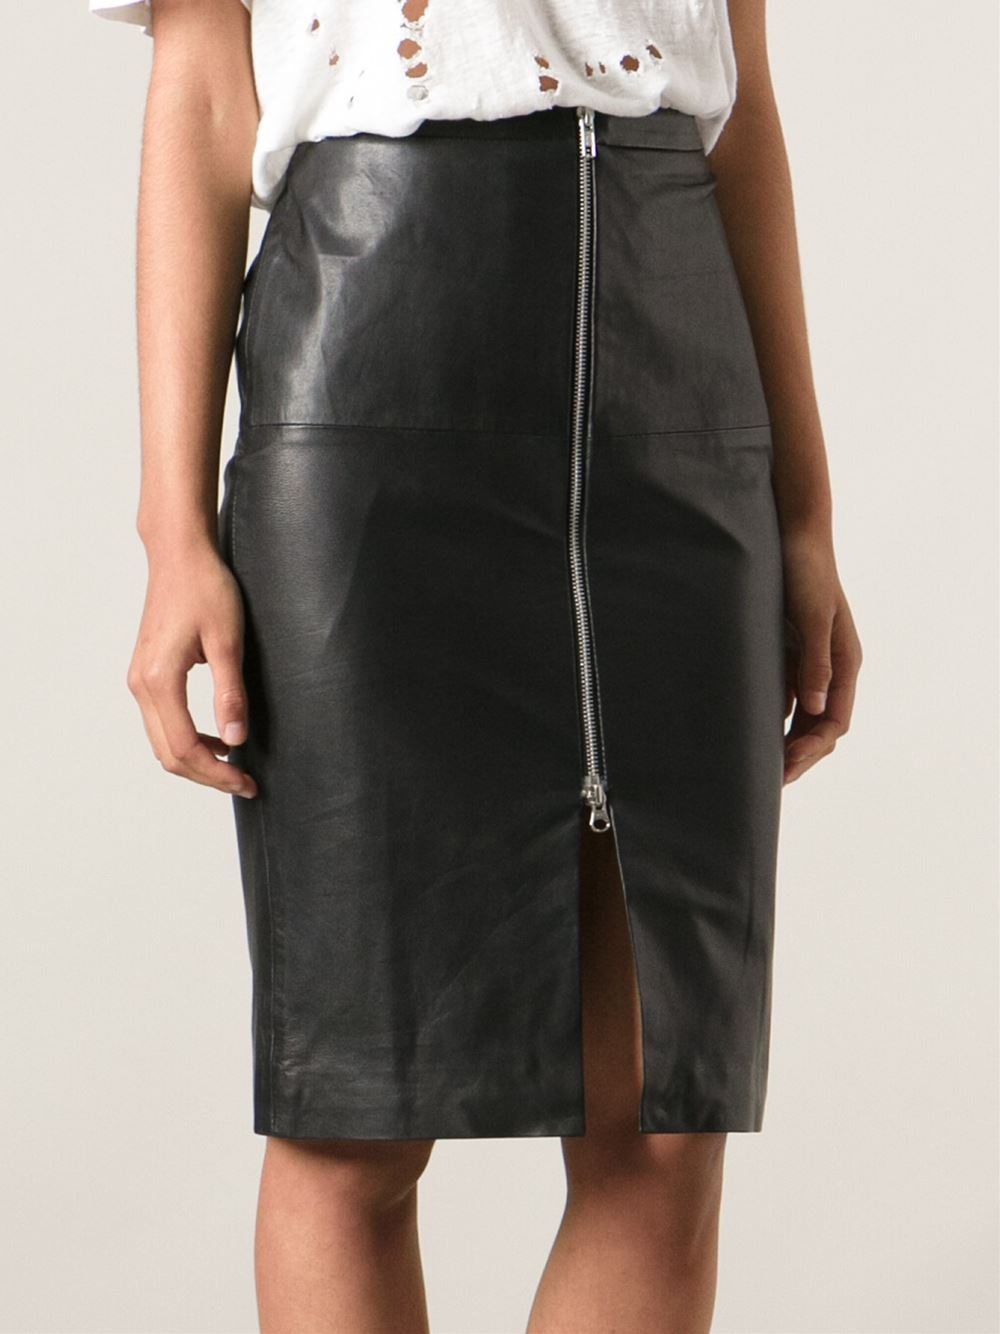 Lyst - Muubaa Leather Pencil Skirt in Black